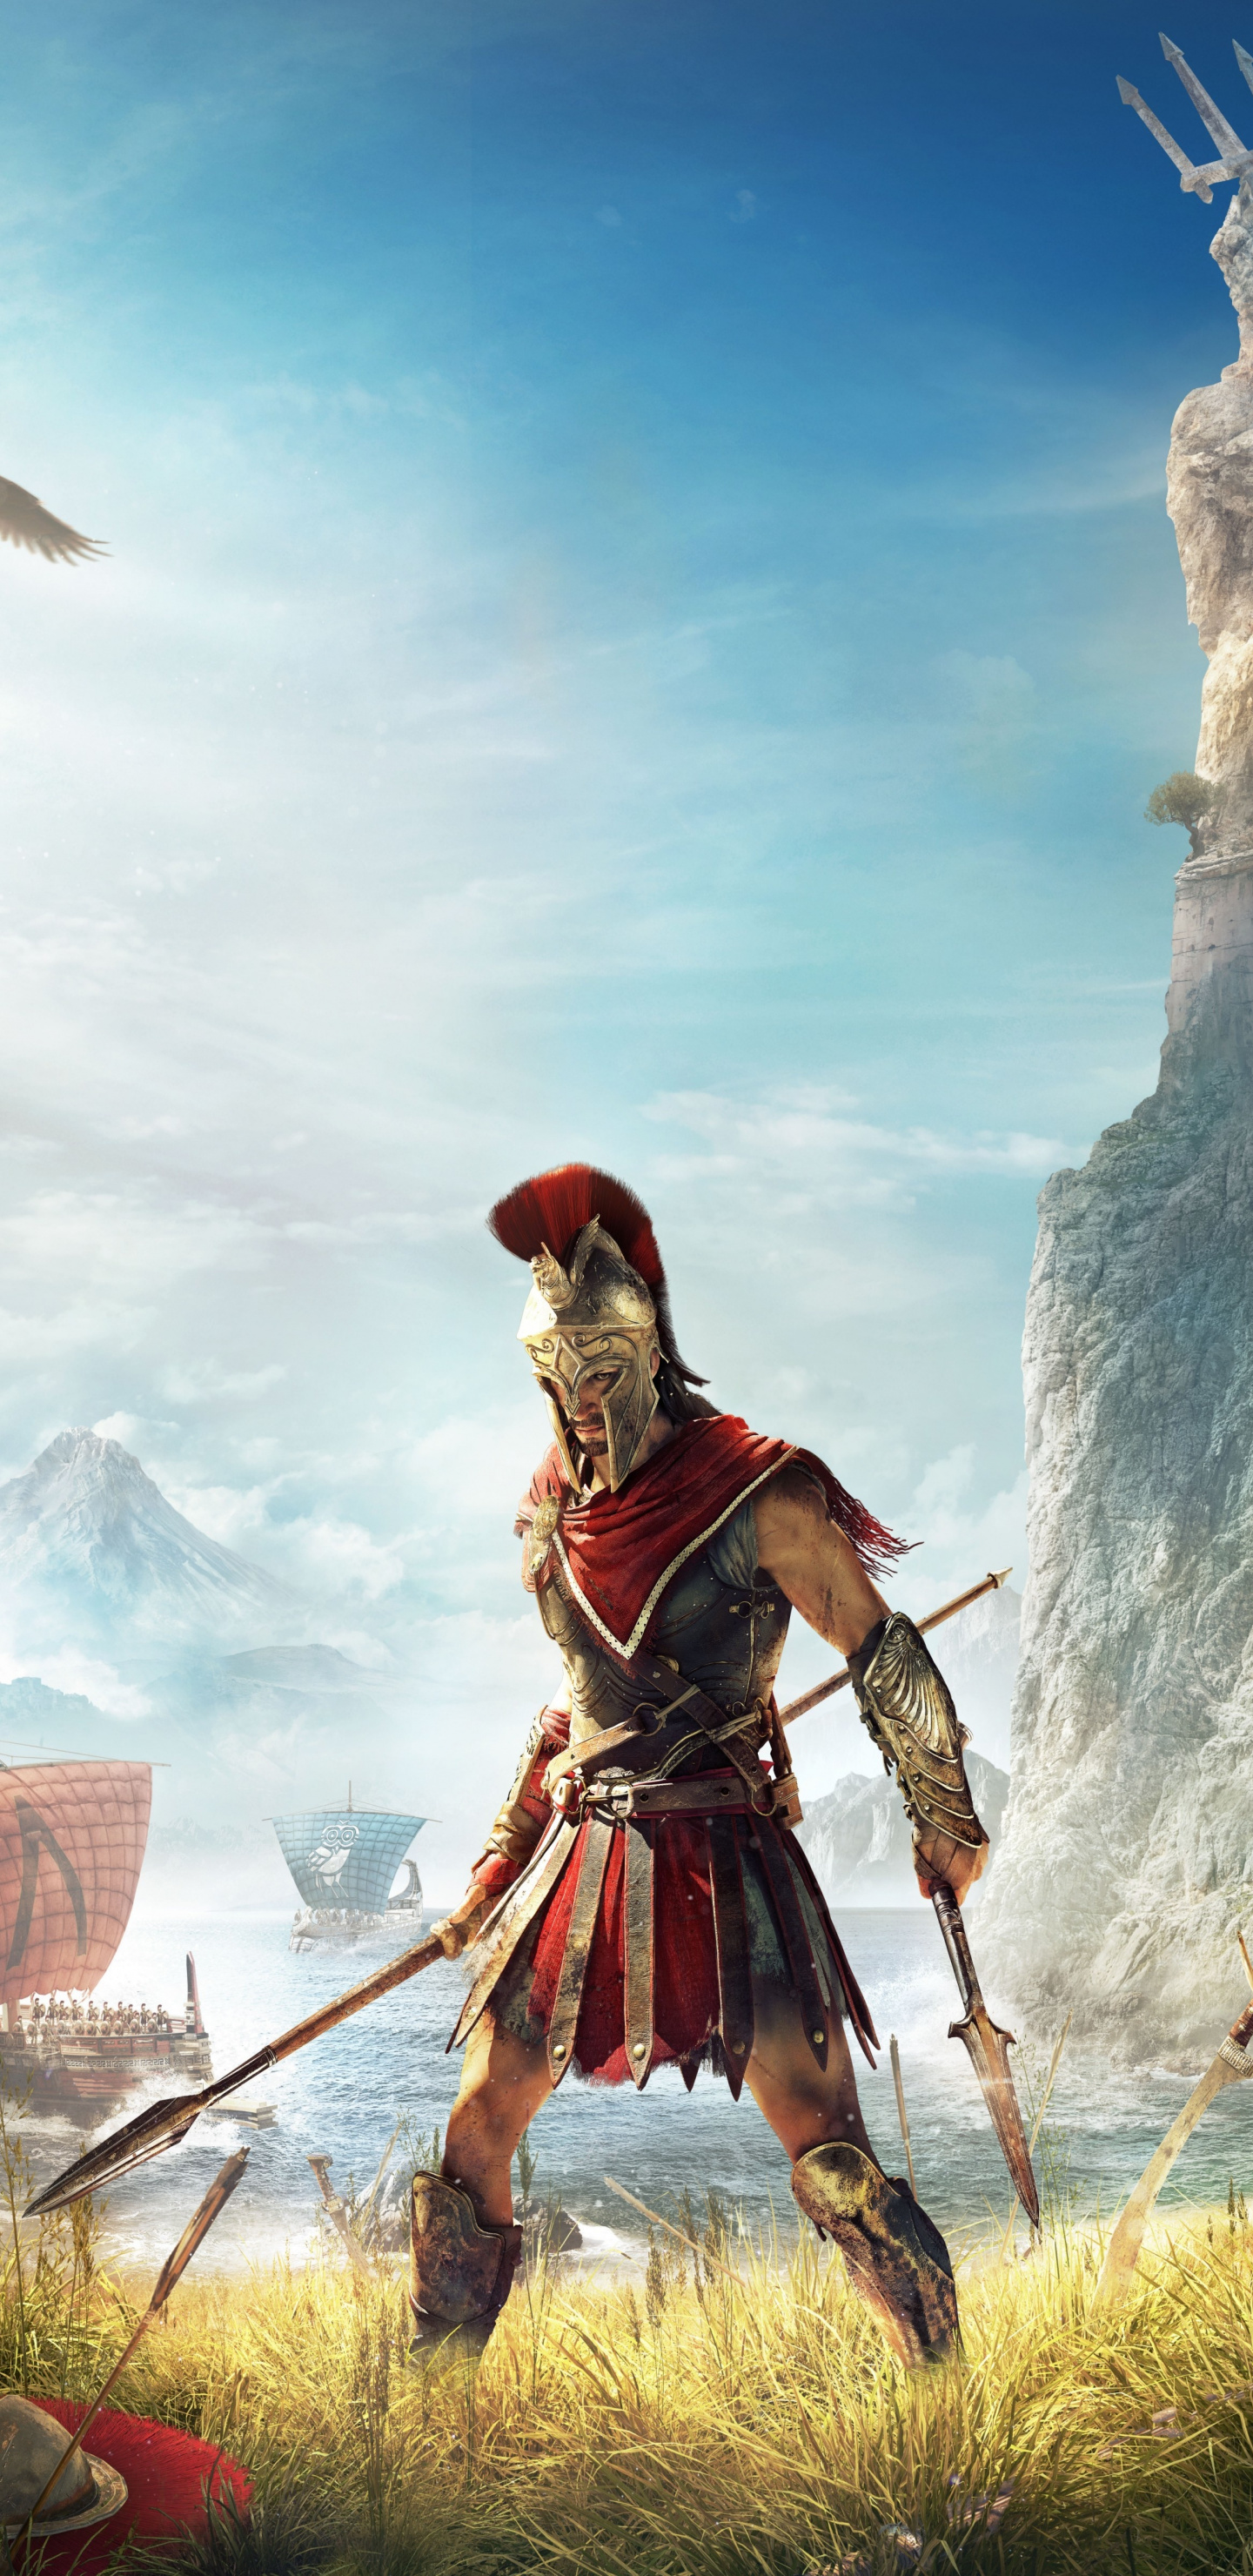 assassin's creed wallpaper,action adventure game,mythology,conquistador,cg artwork,adventure game